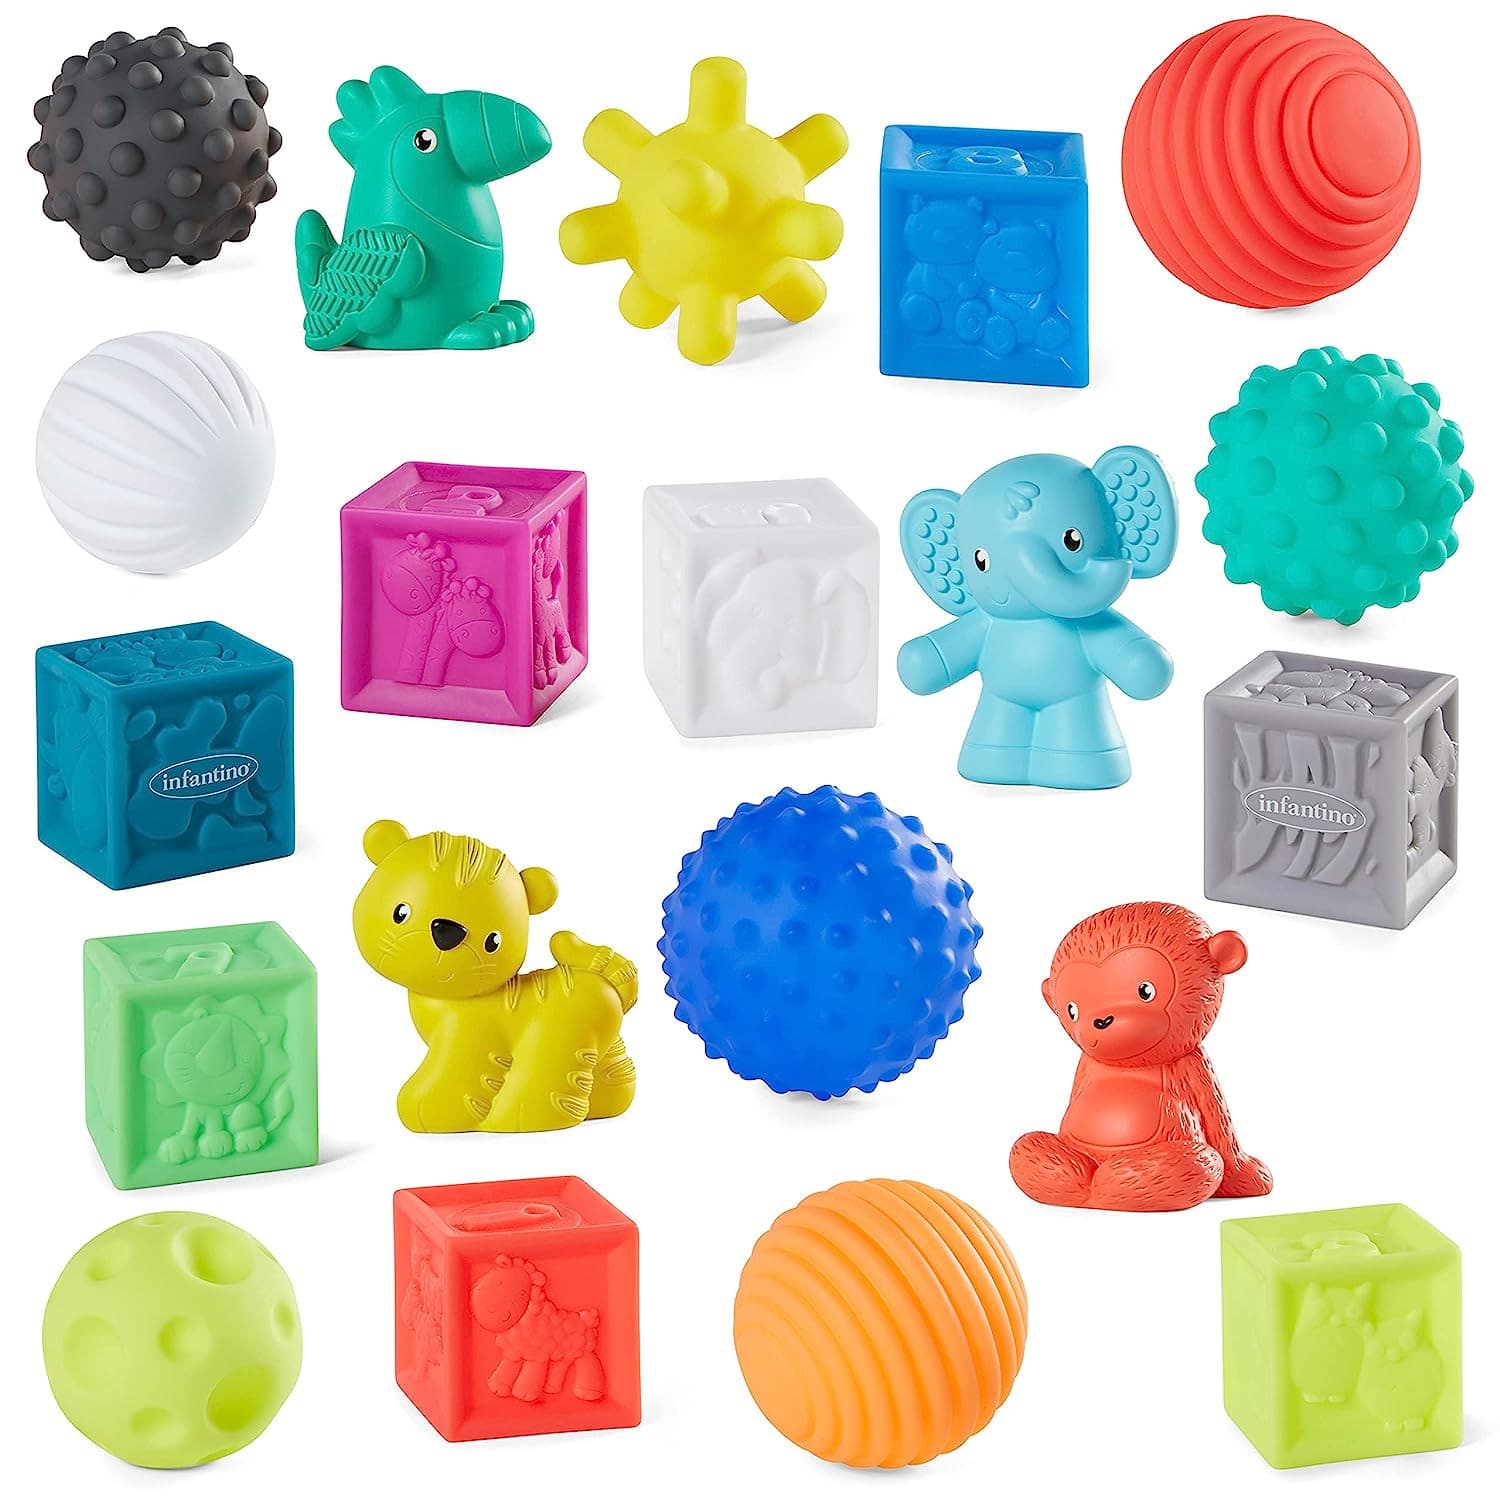 Infantino Sensory Balls, Blocks & Buddies - Textured, Soft & Colorful Toys.